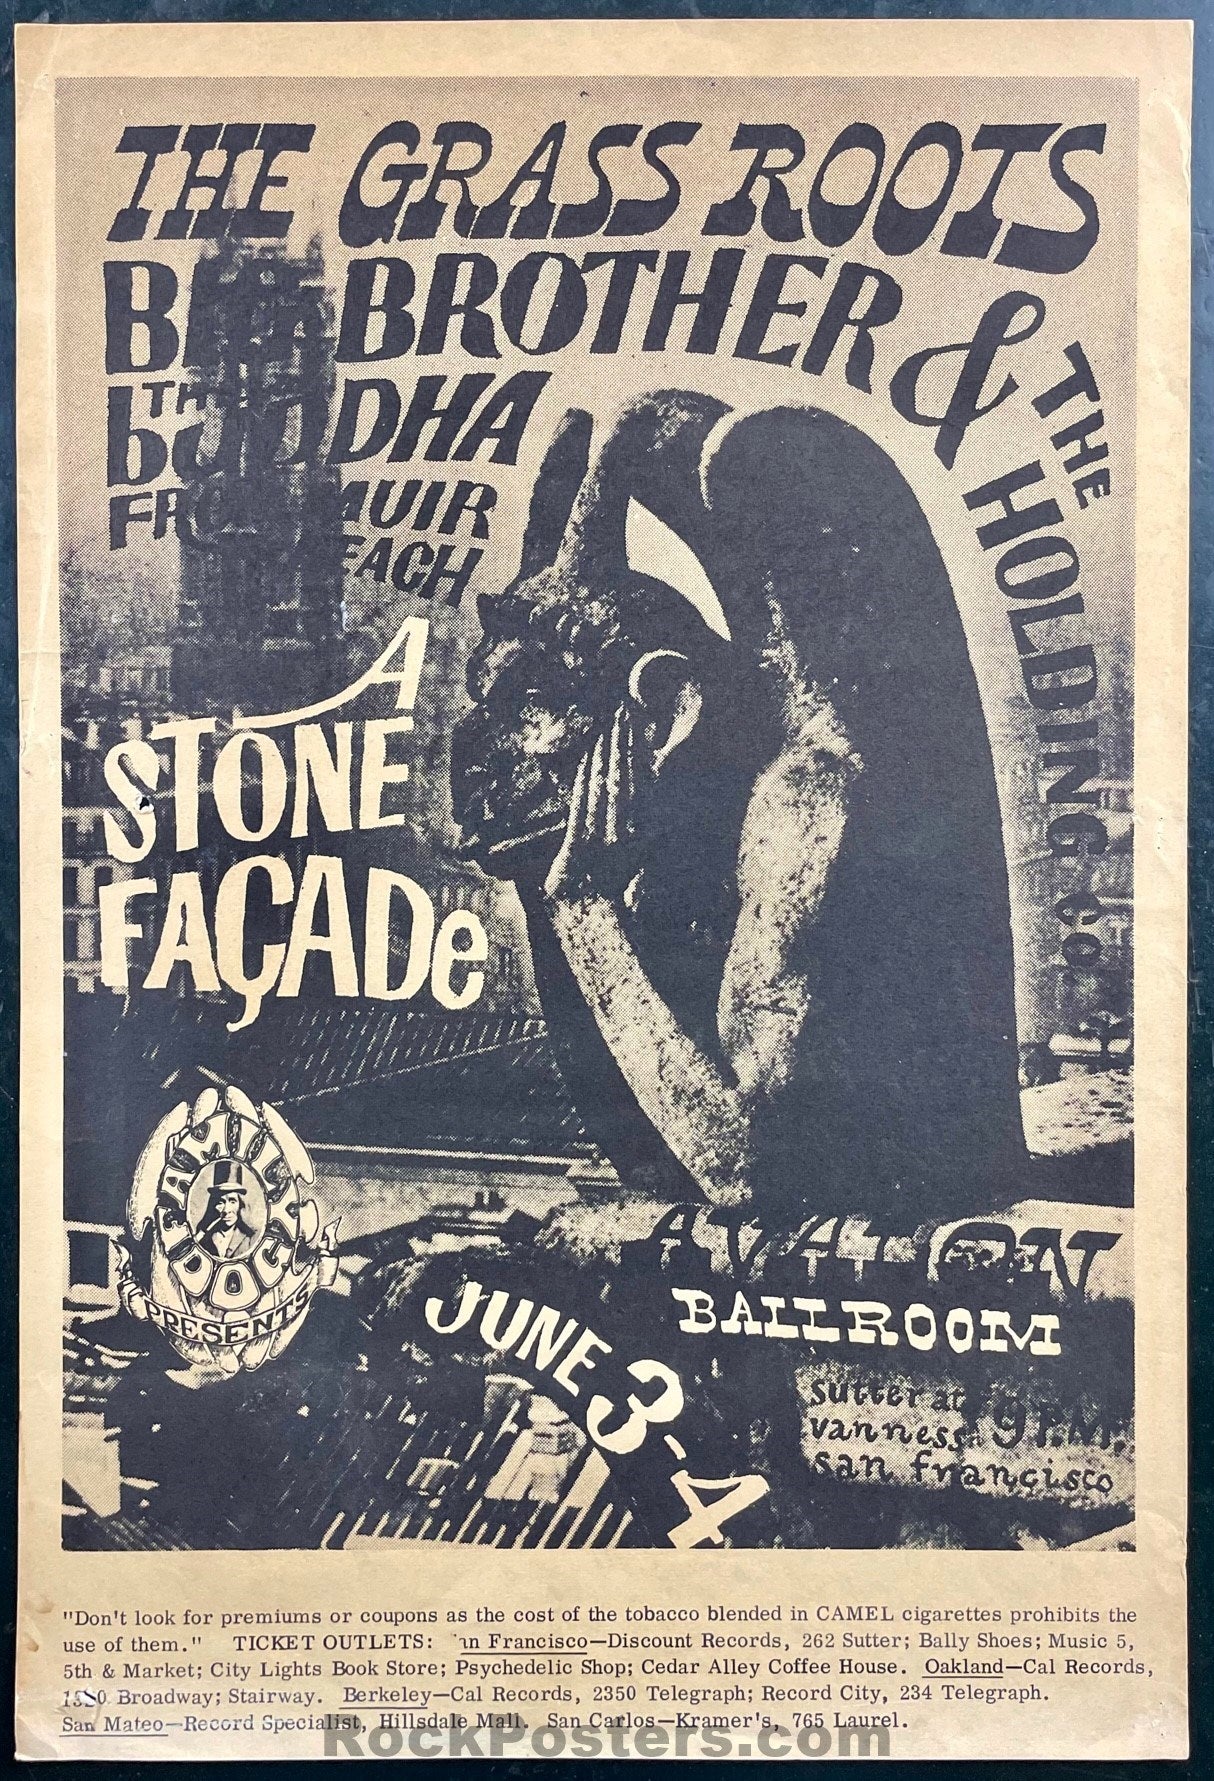 AUCTION - FD-11 - Big Brother Janis Joplin - Victor Moscoso - Avalon Ballroom - 1966 Poster - Very Good